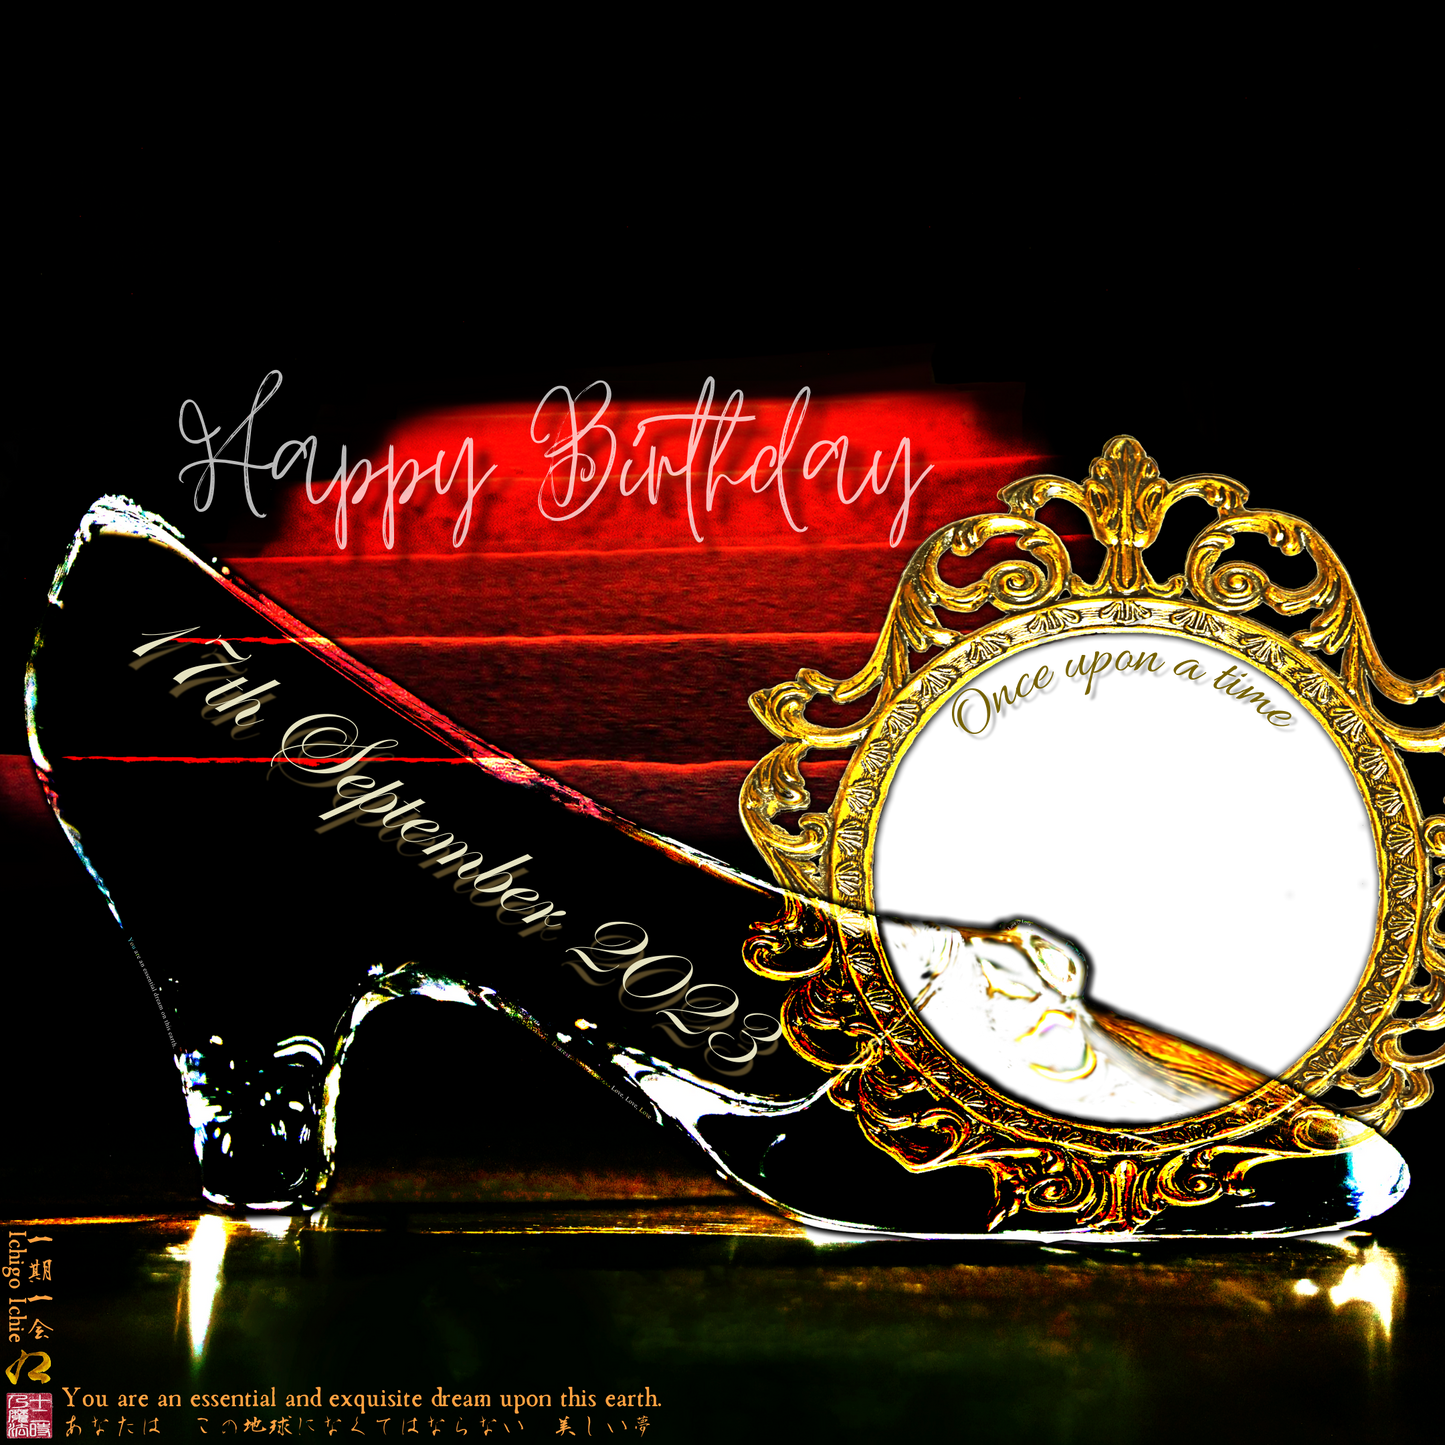 Happy Birthday Glass Slipper "Ichigo Ichie" 17th September 2023 the Right (1-of-1) NFT Art